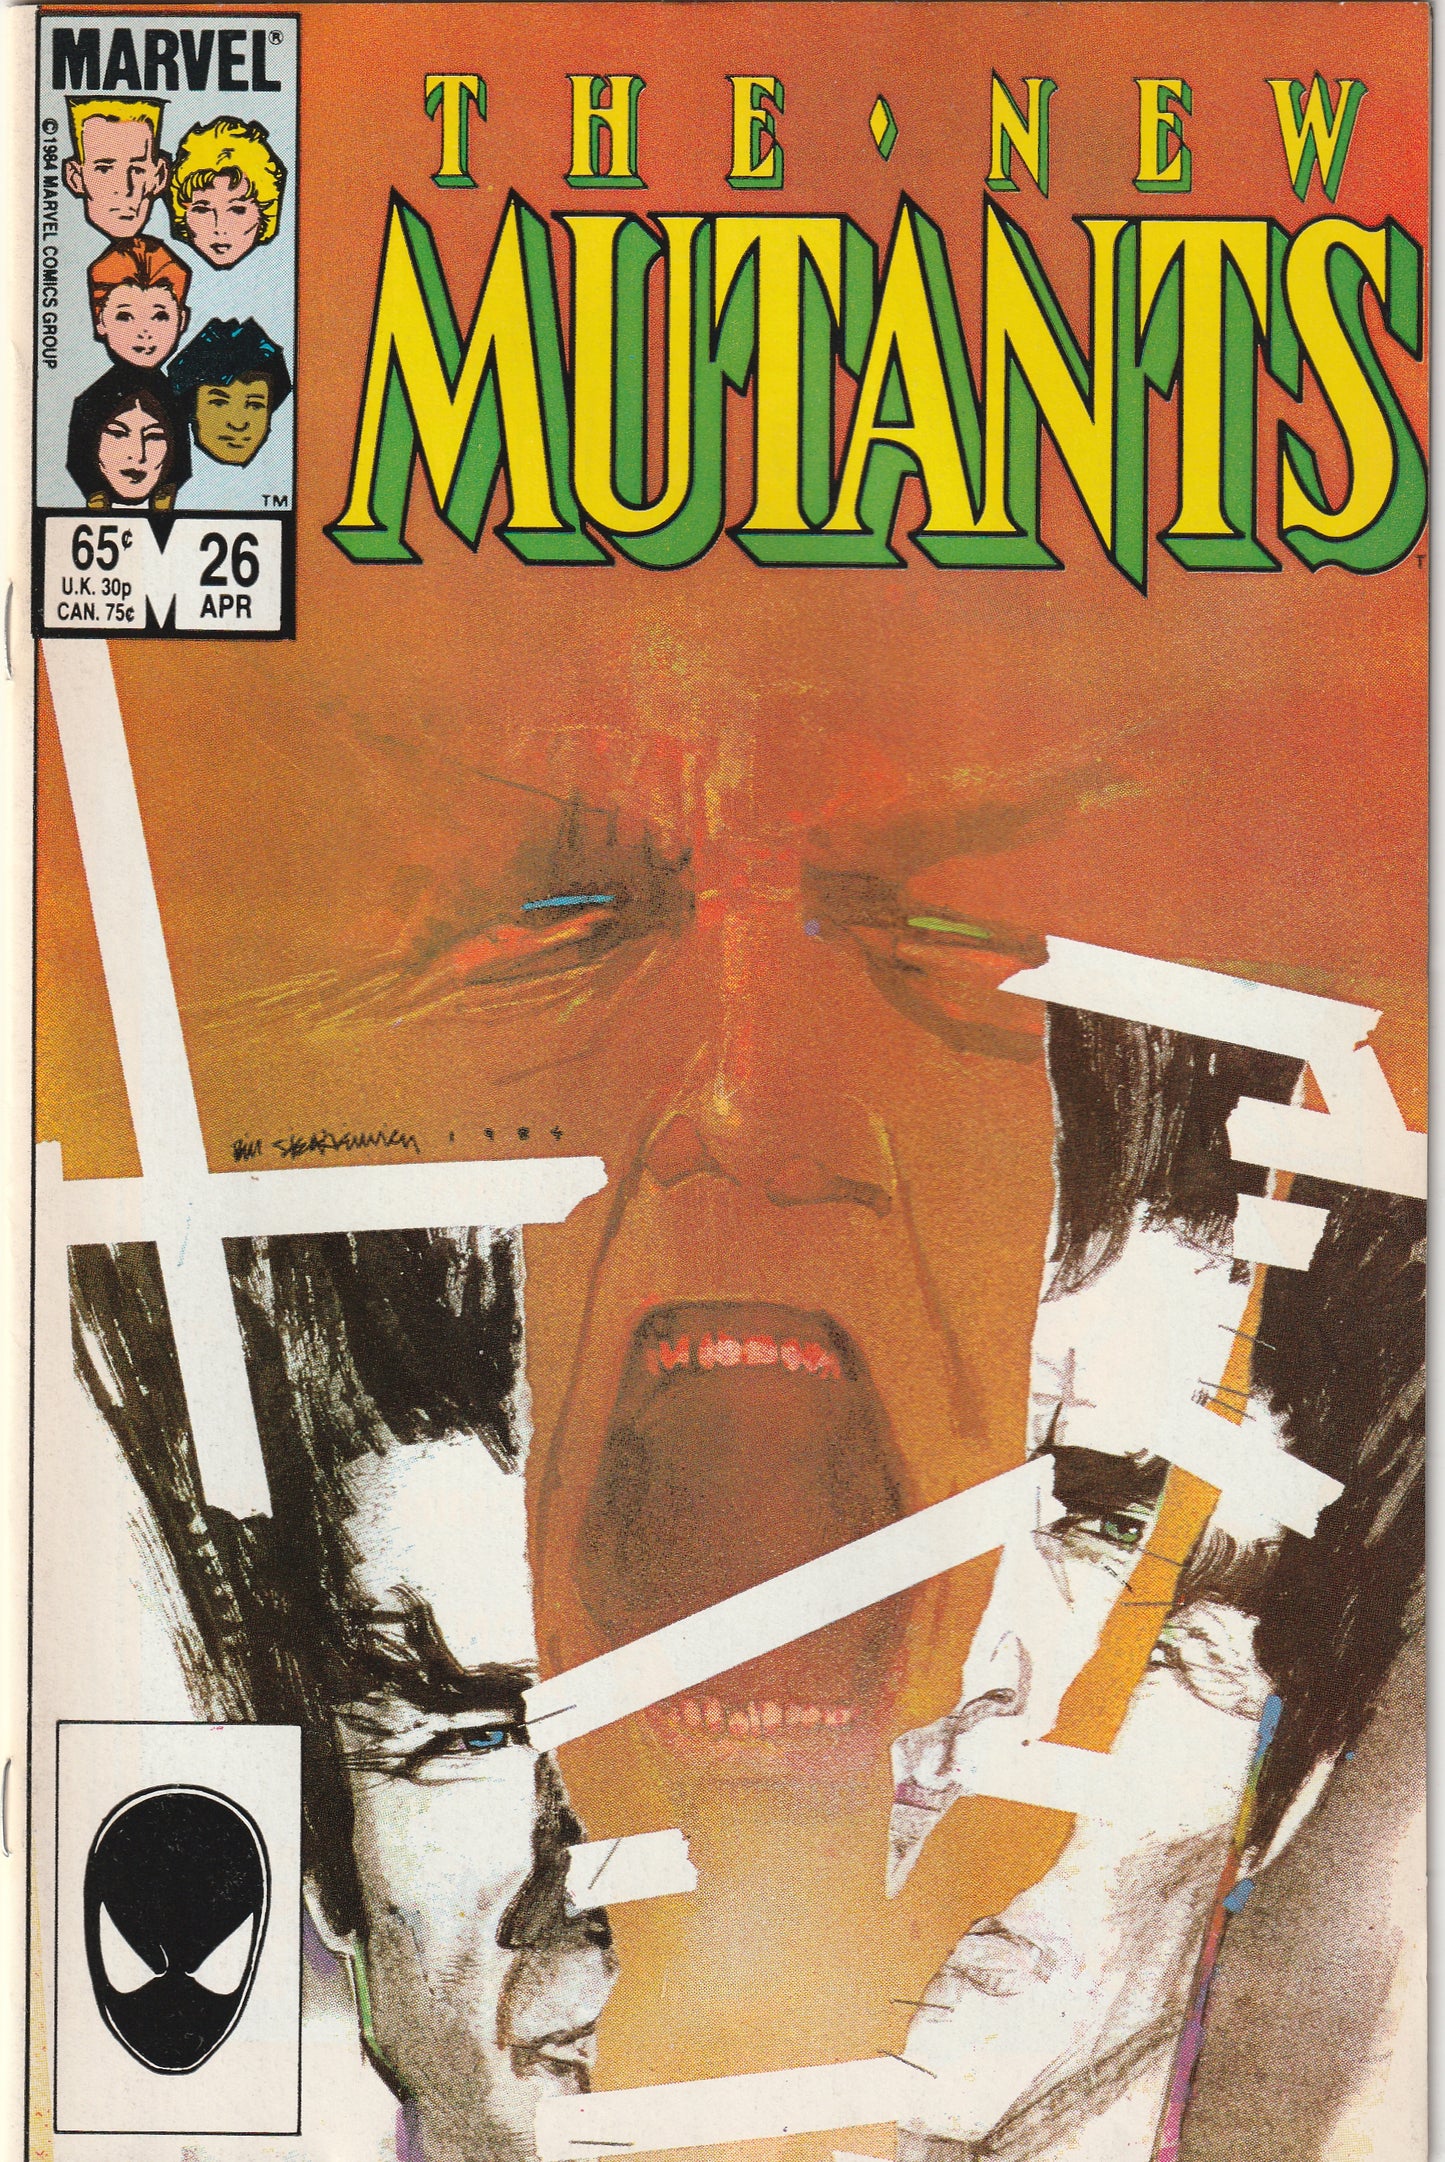 New Mutants #26 (1985) - 1st Full Appearance of David Haller aka. Legion.